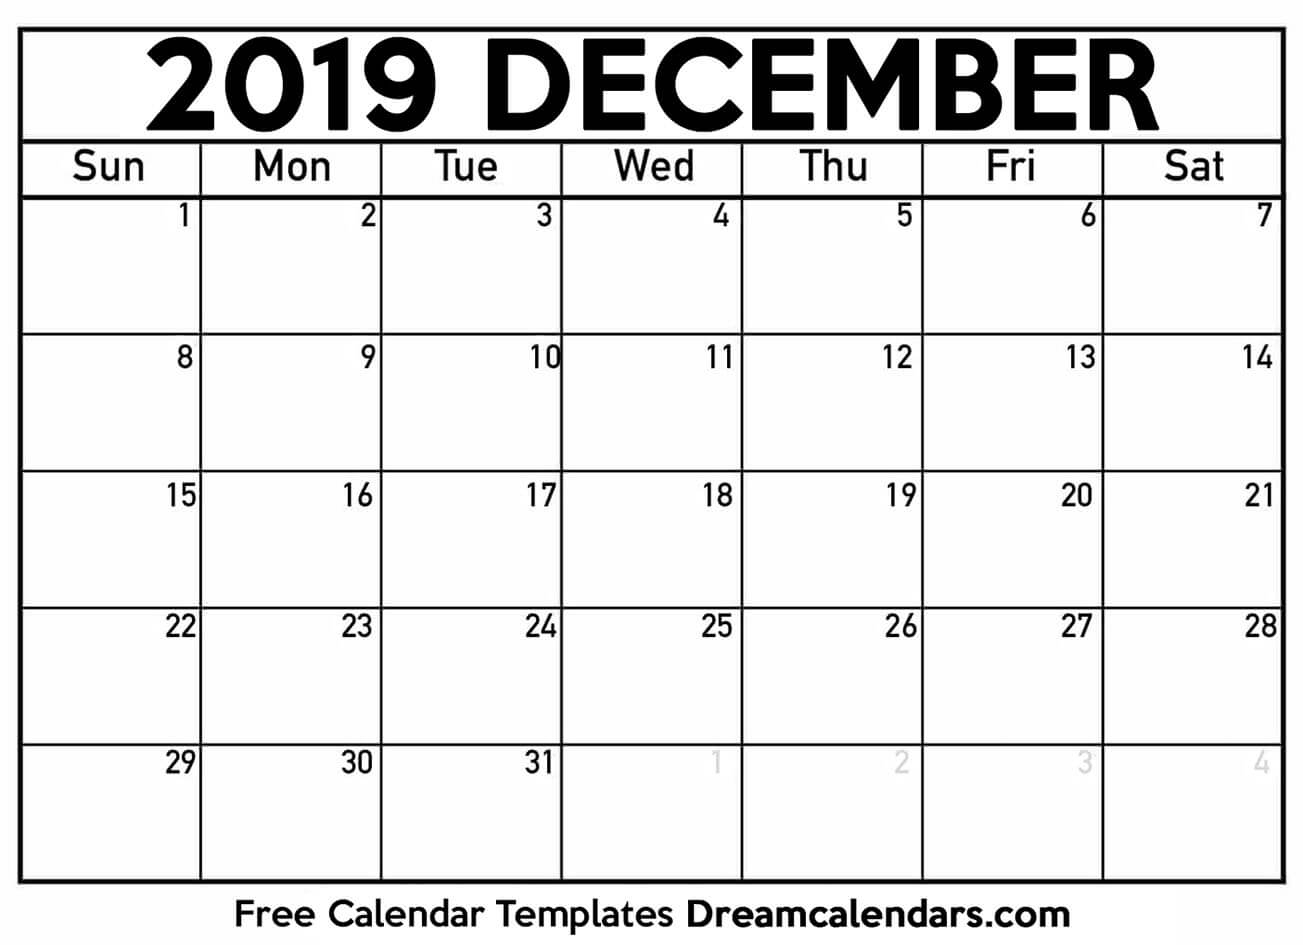 Free December 2019 Printable Calendar | Dream Calendars